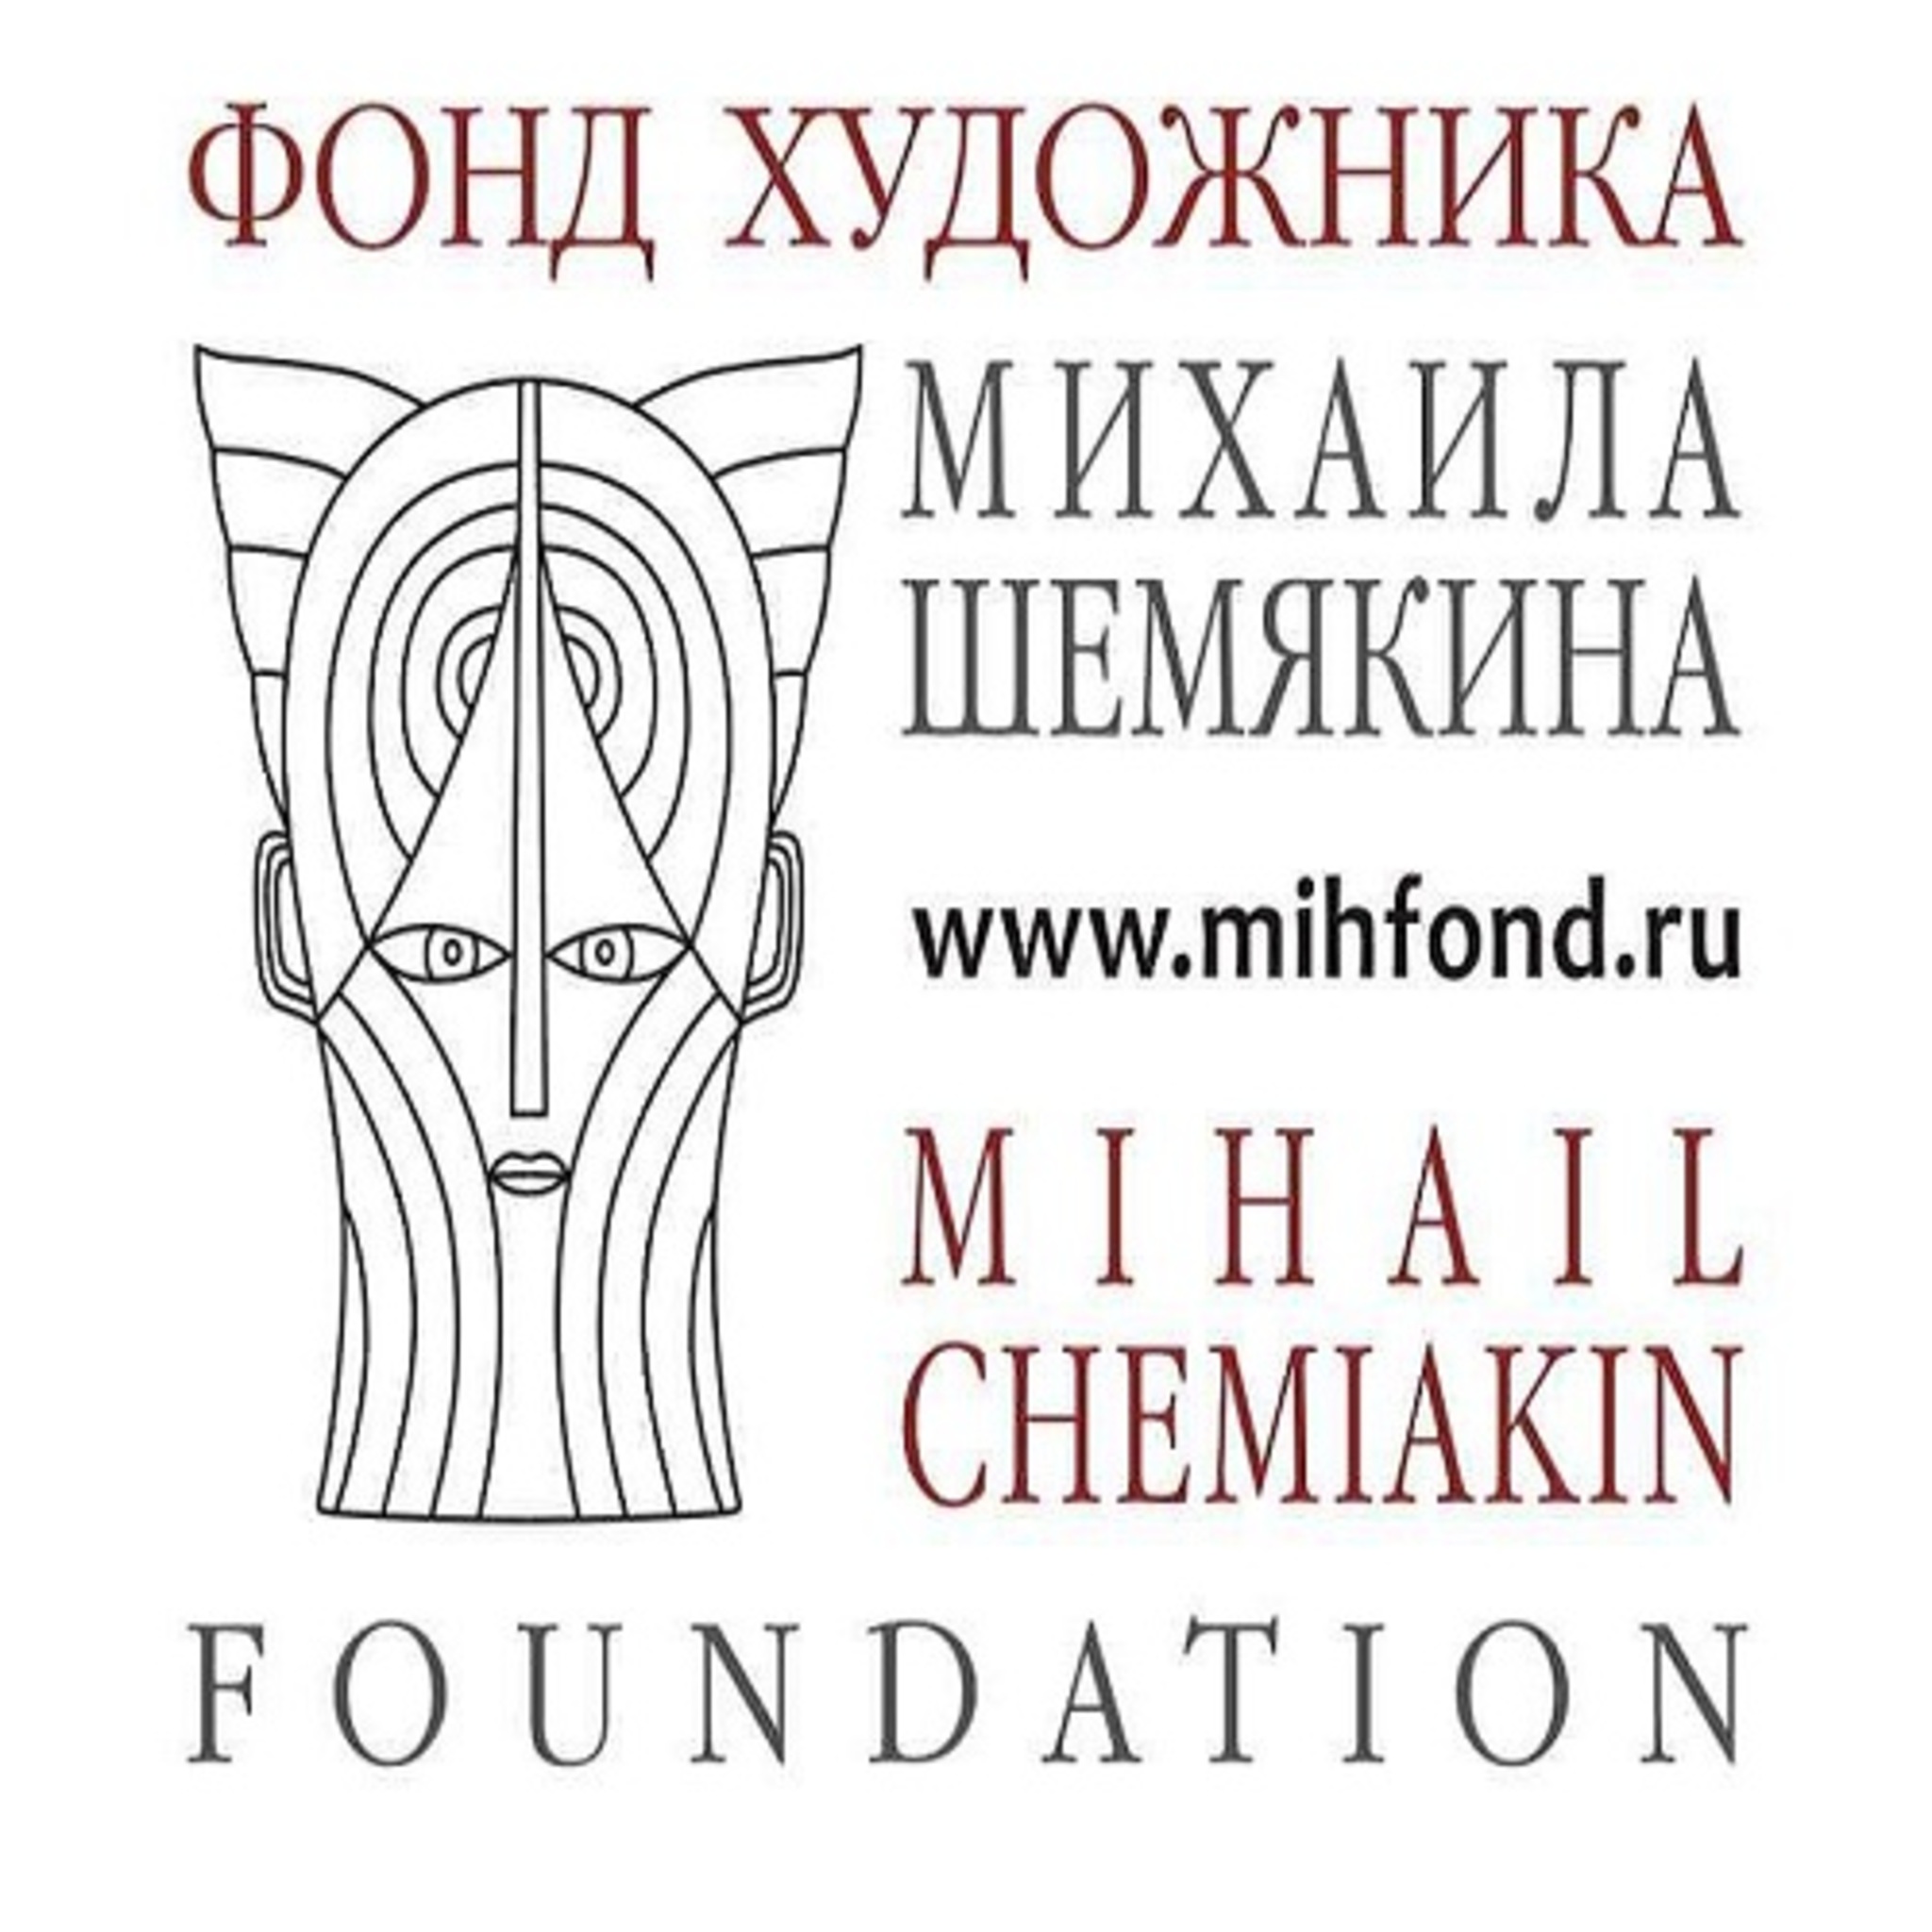 The foundation of the artist Mikhail Shemyakin